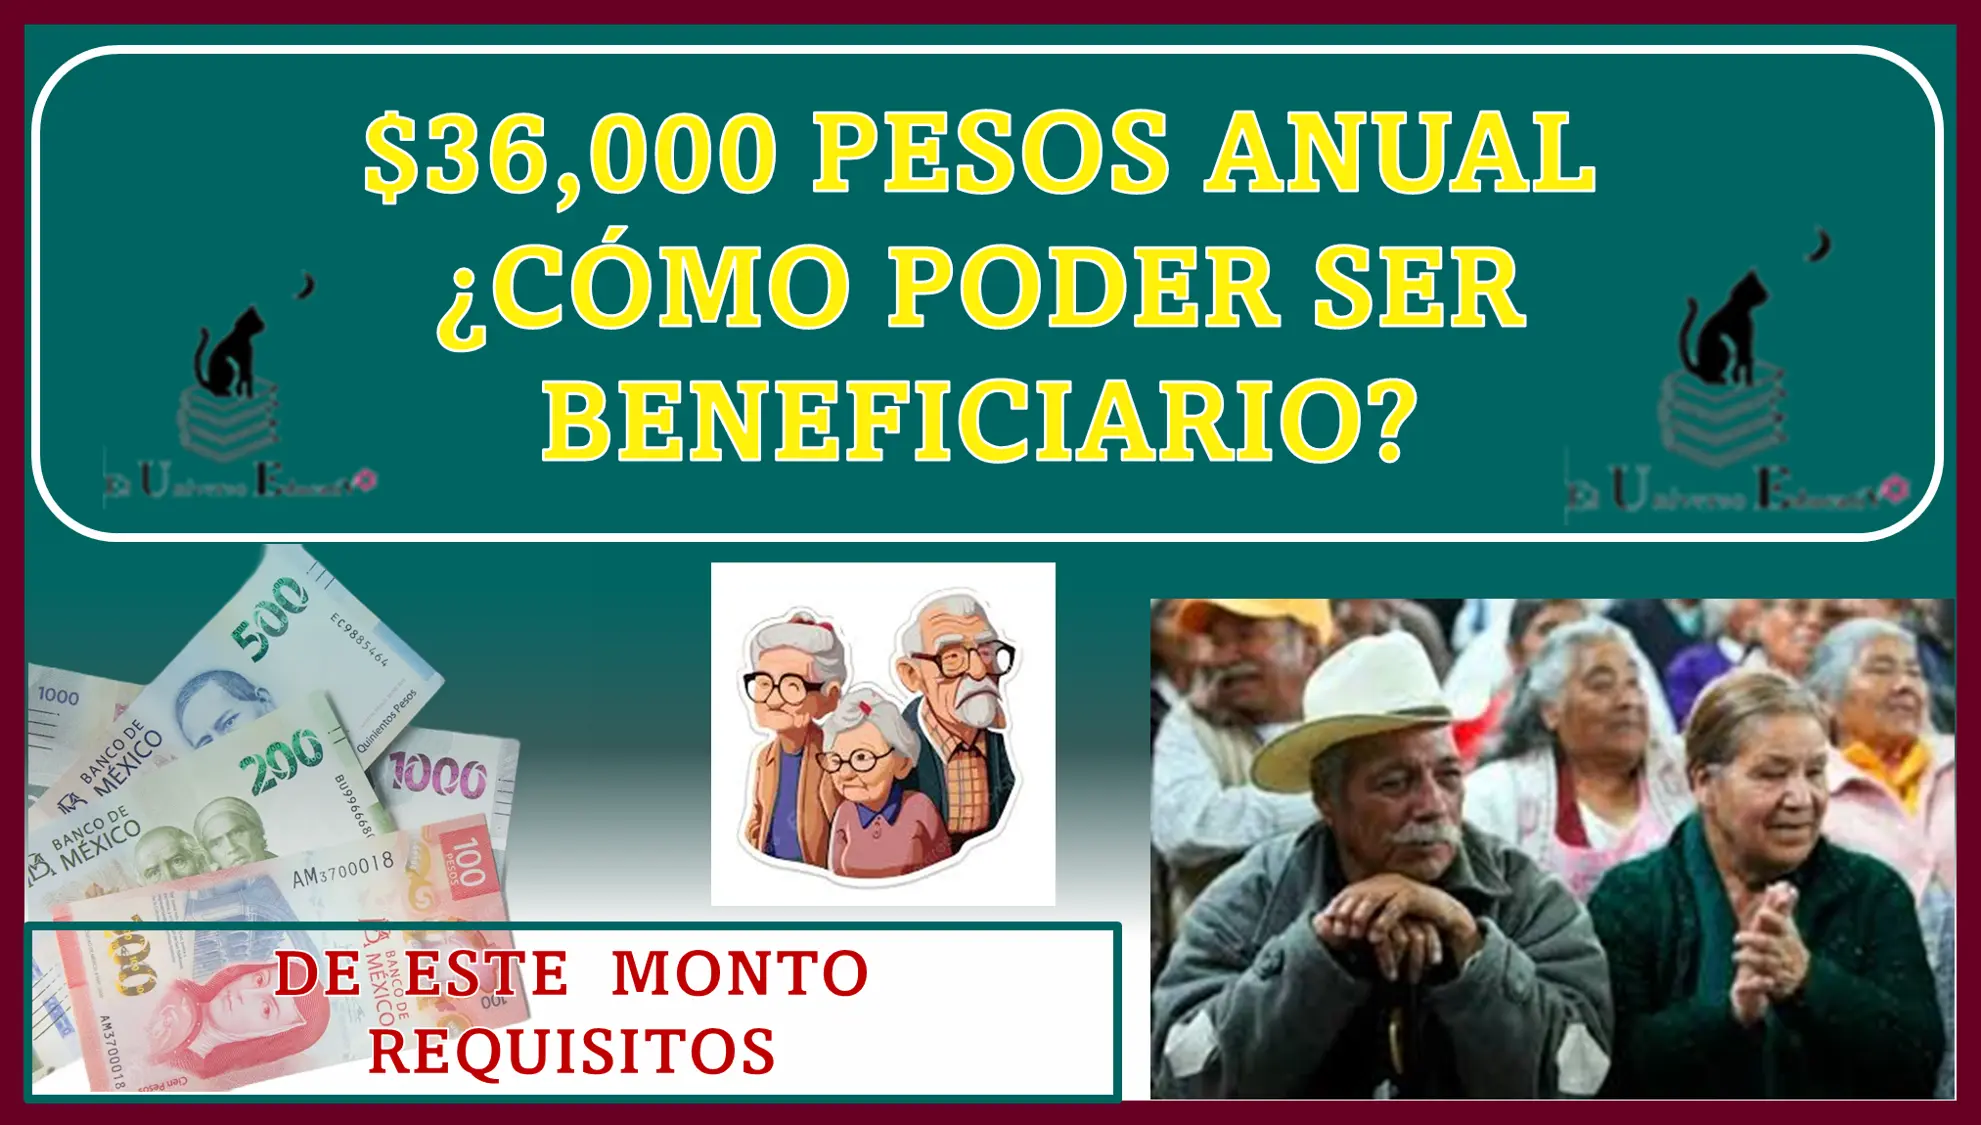 $36,000 PESOS ANUAL | CÓMO PODER SER BENEFICIARIO DE ESTE MONTO | REQUISITOS 